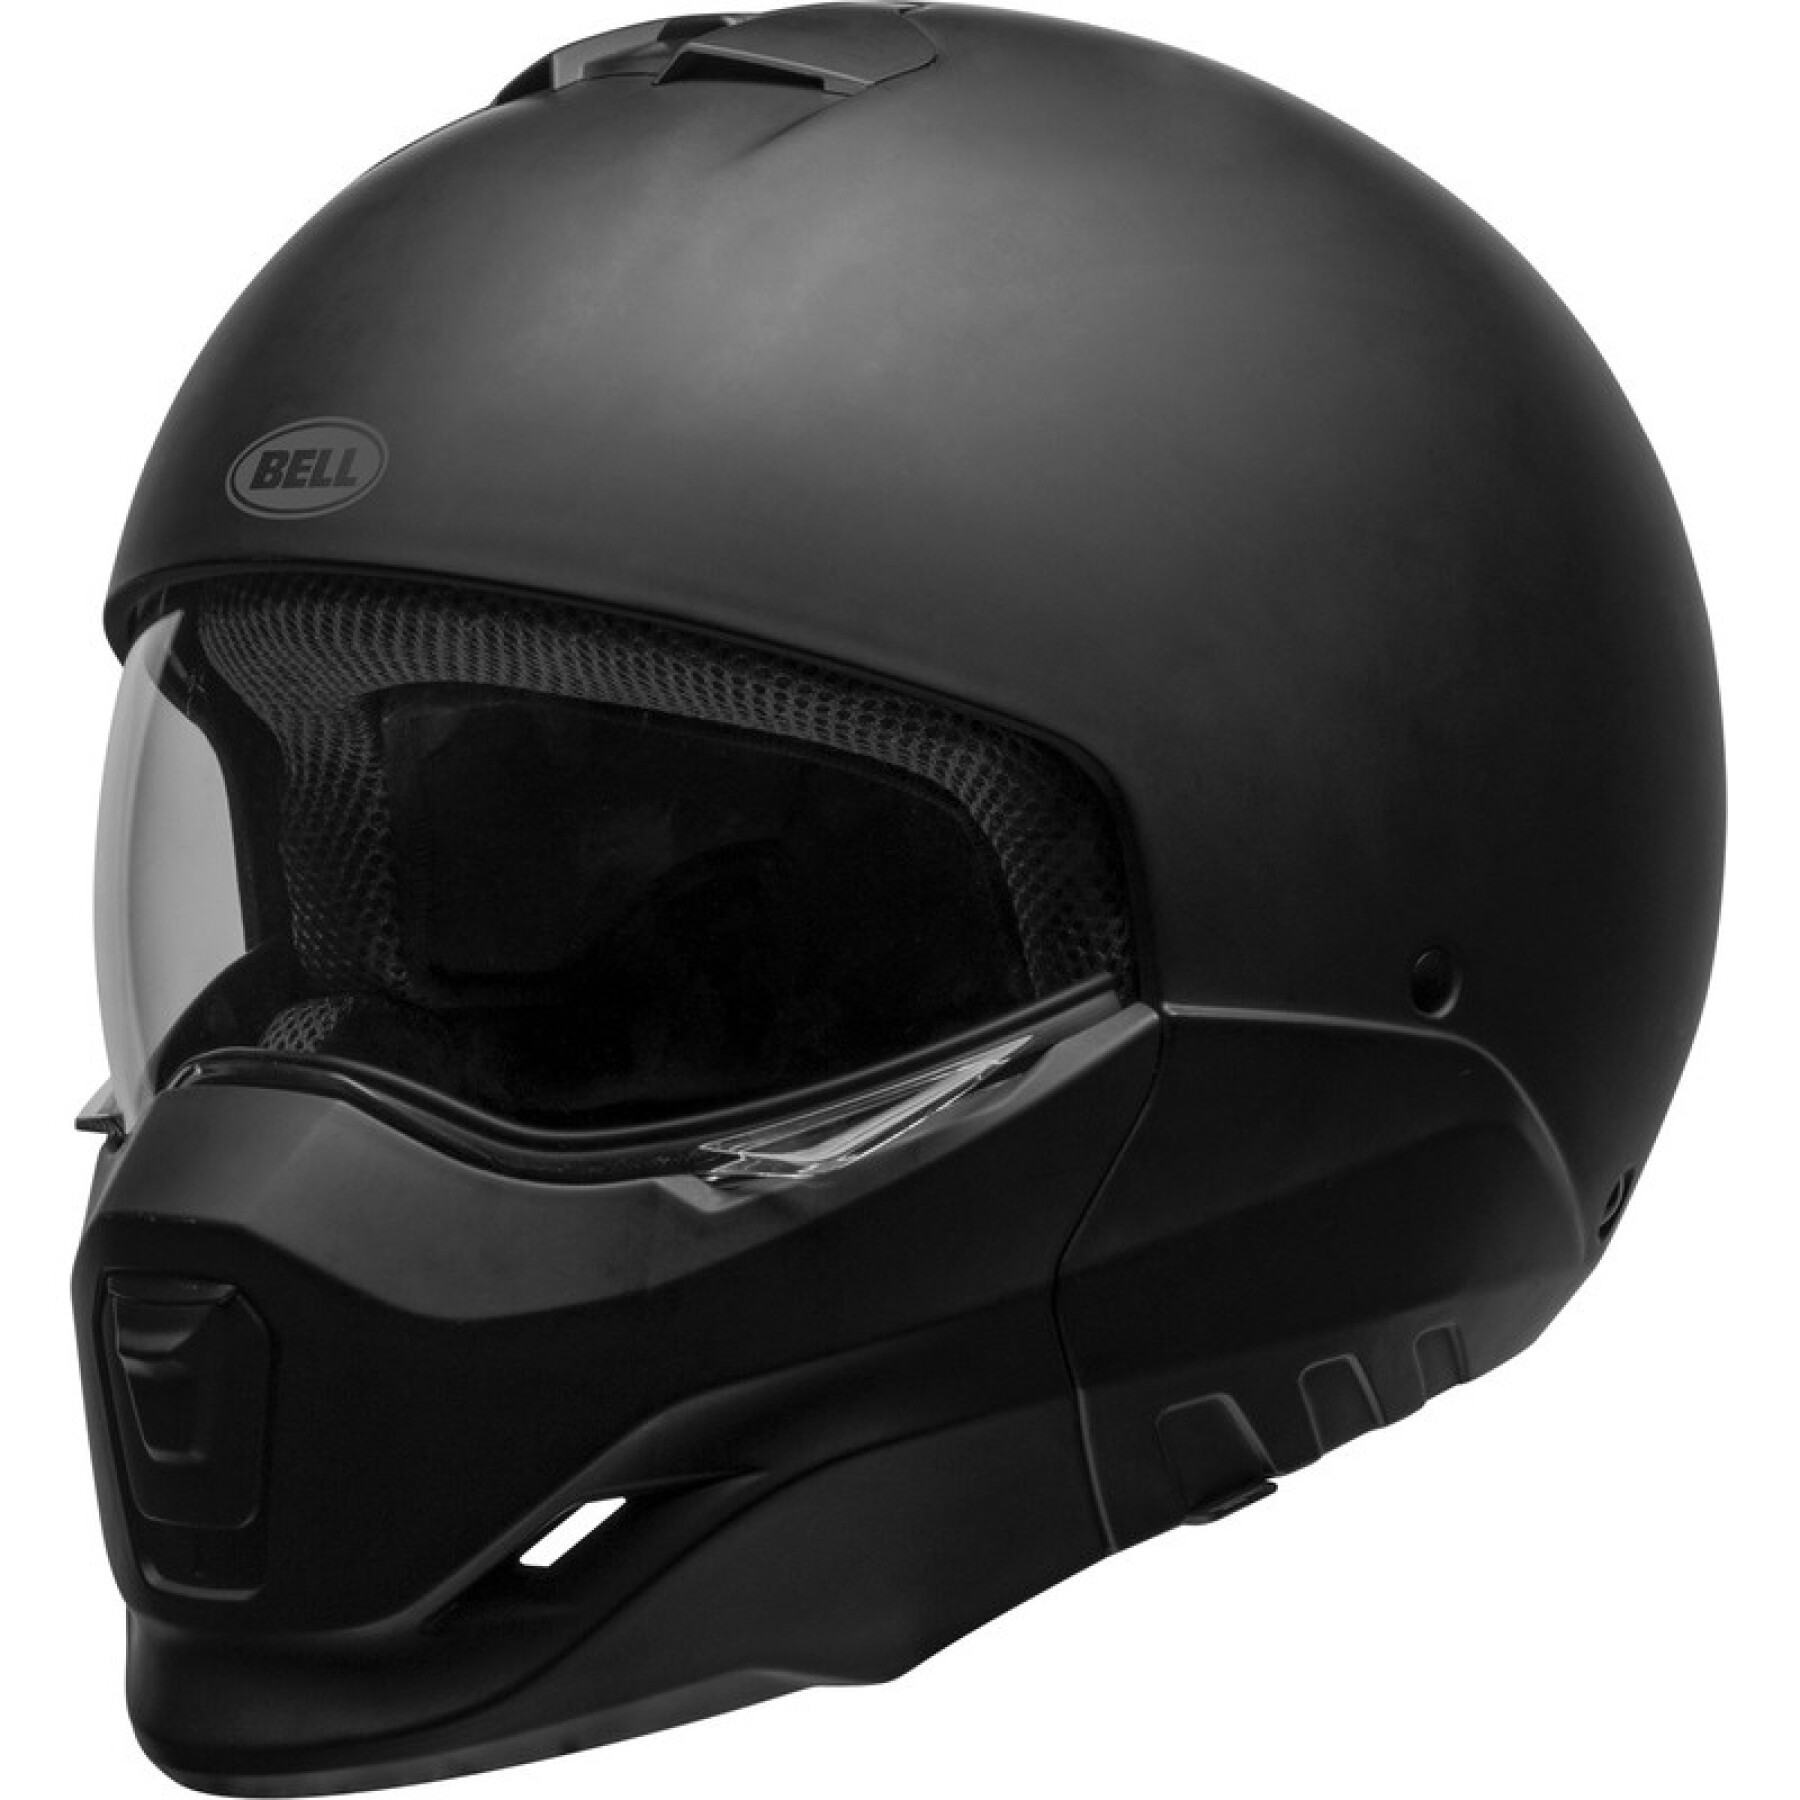 Modular motorcycle helmet Bell Broozer